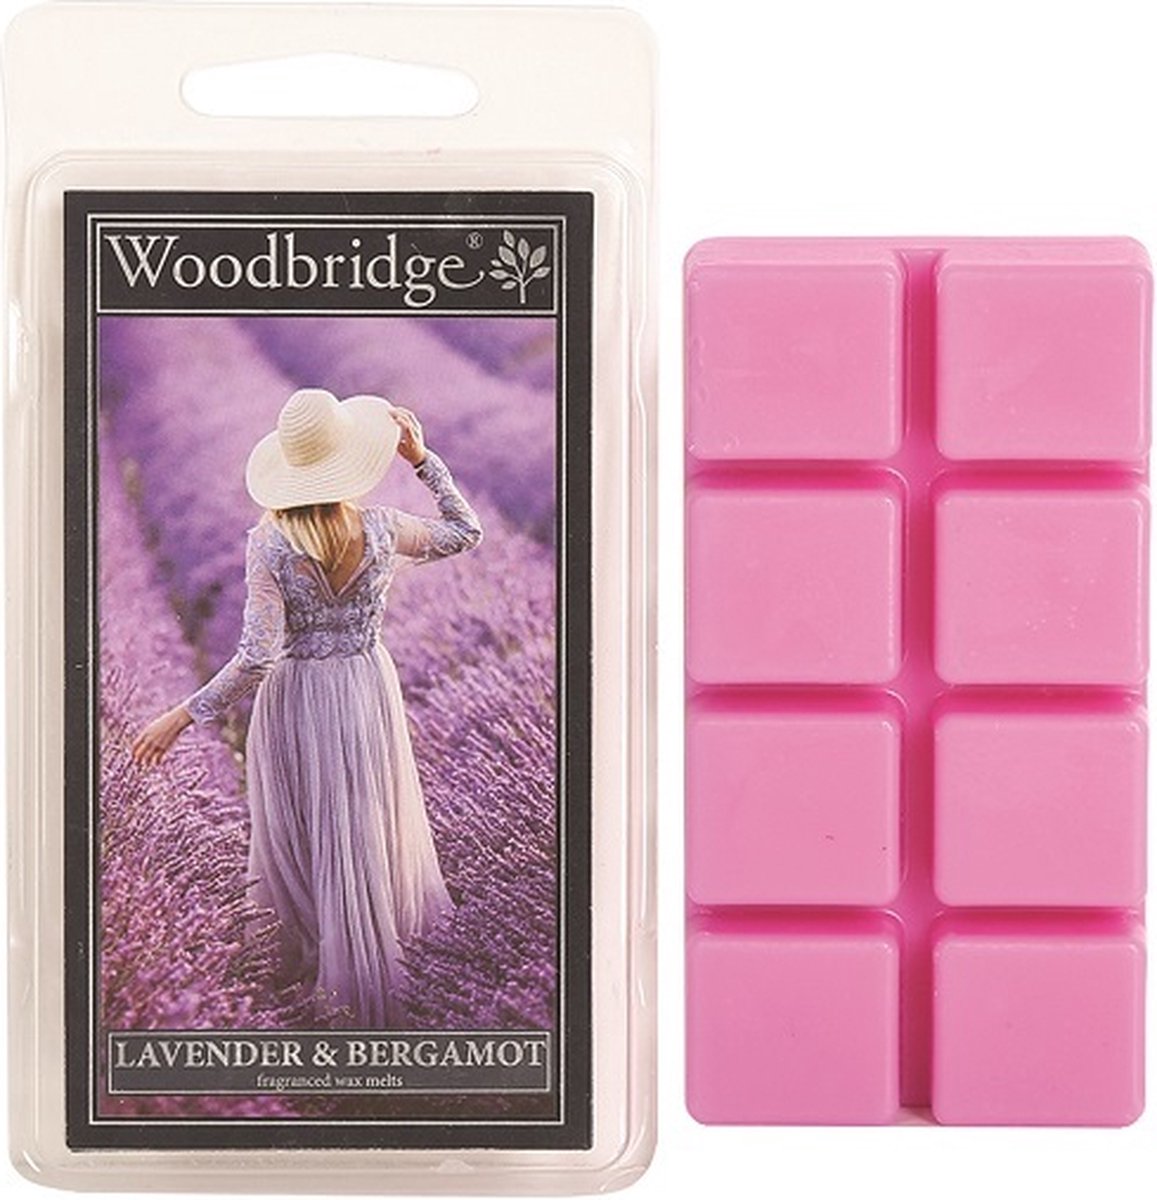 Wax voor crackle burner Woodbridge Lavender & bergamot